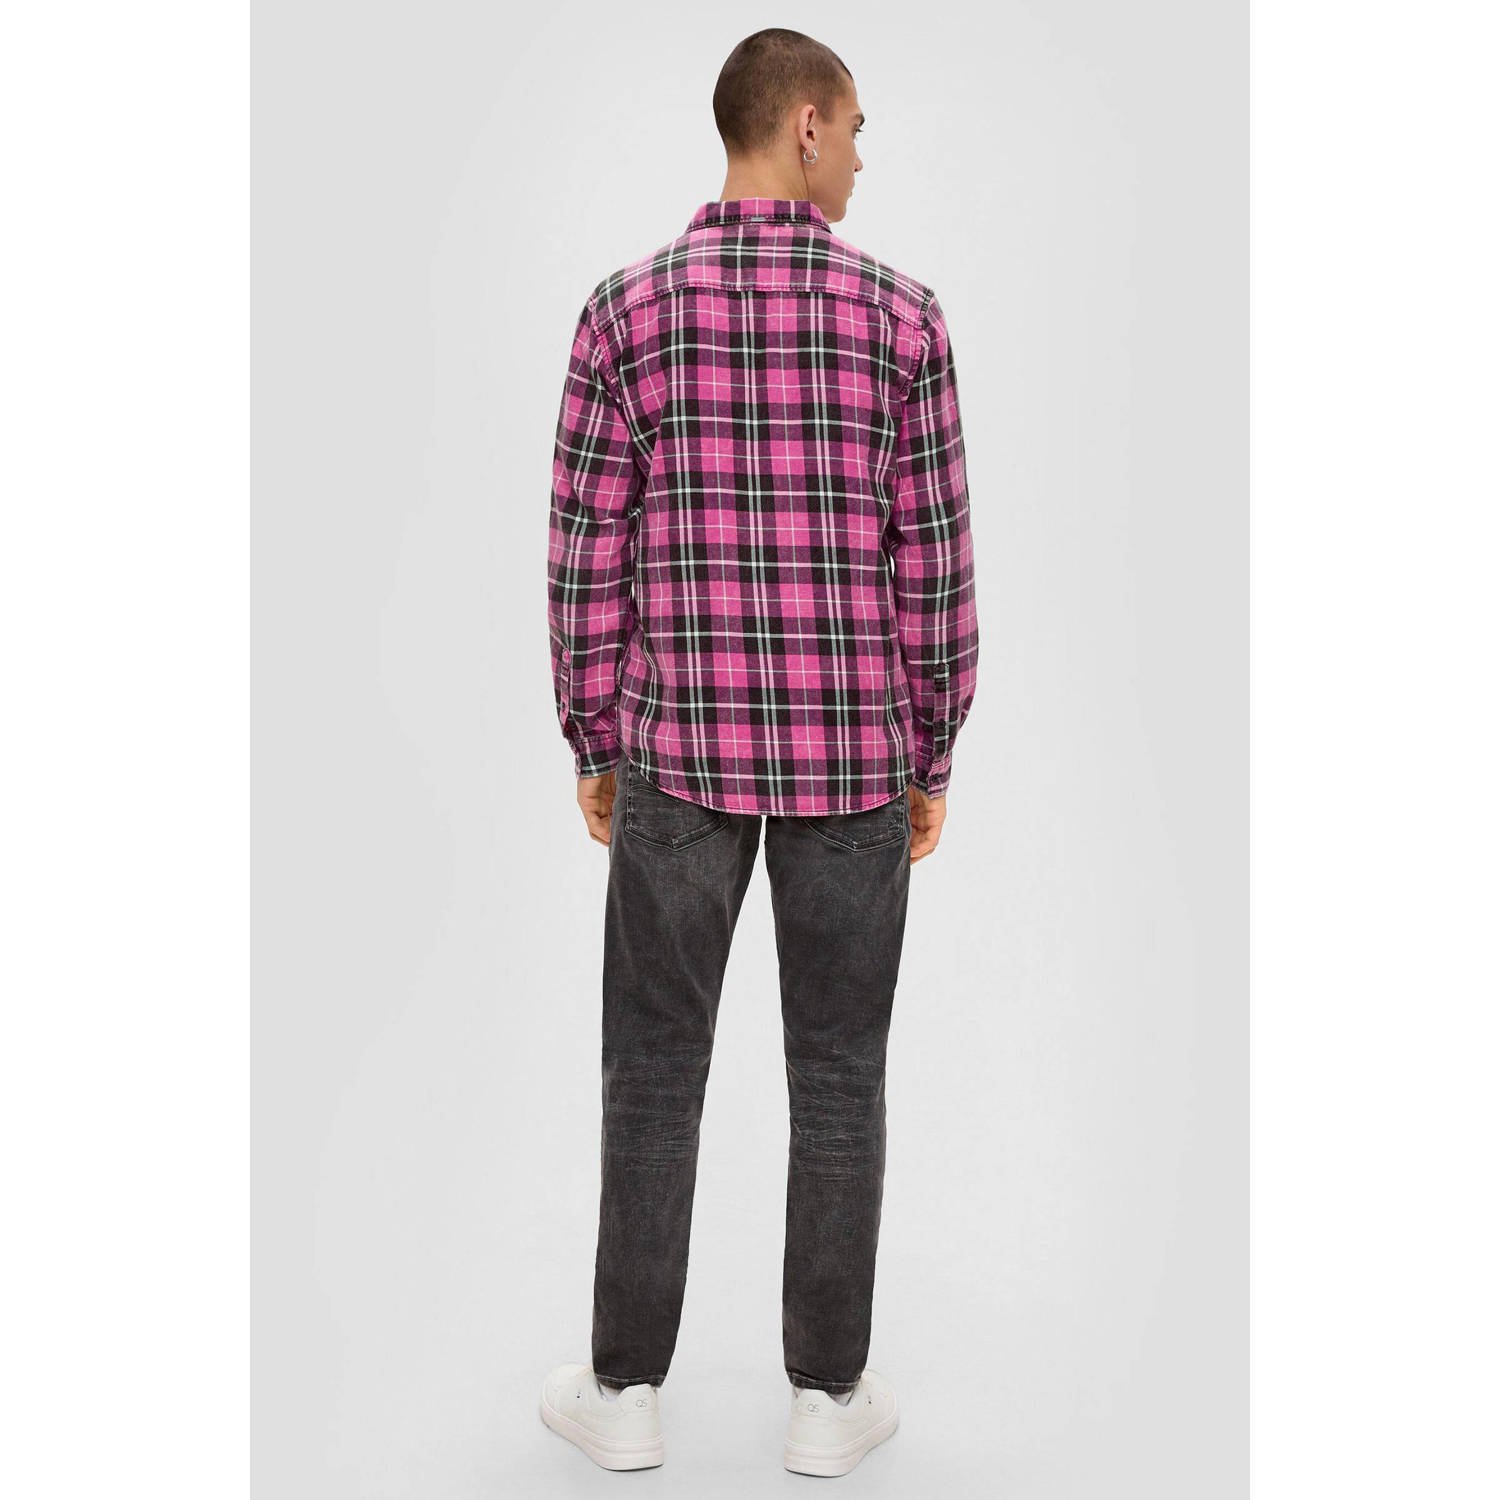 Q S by s.Oliver geruit regular fit overhemd roze